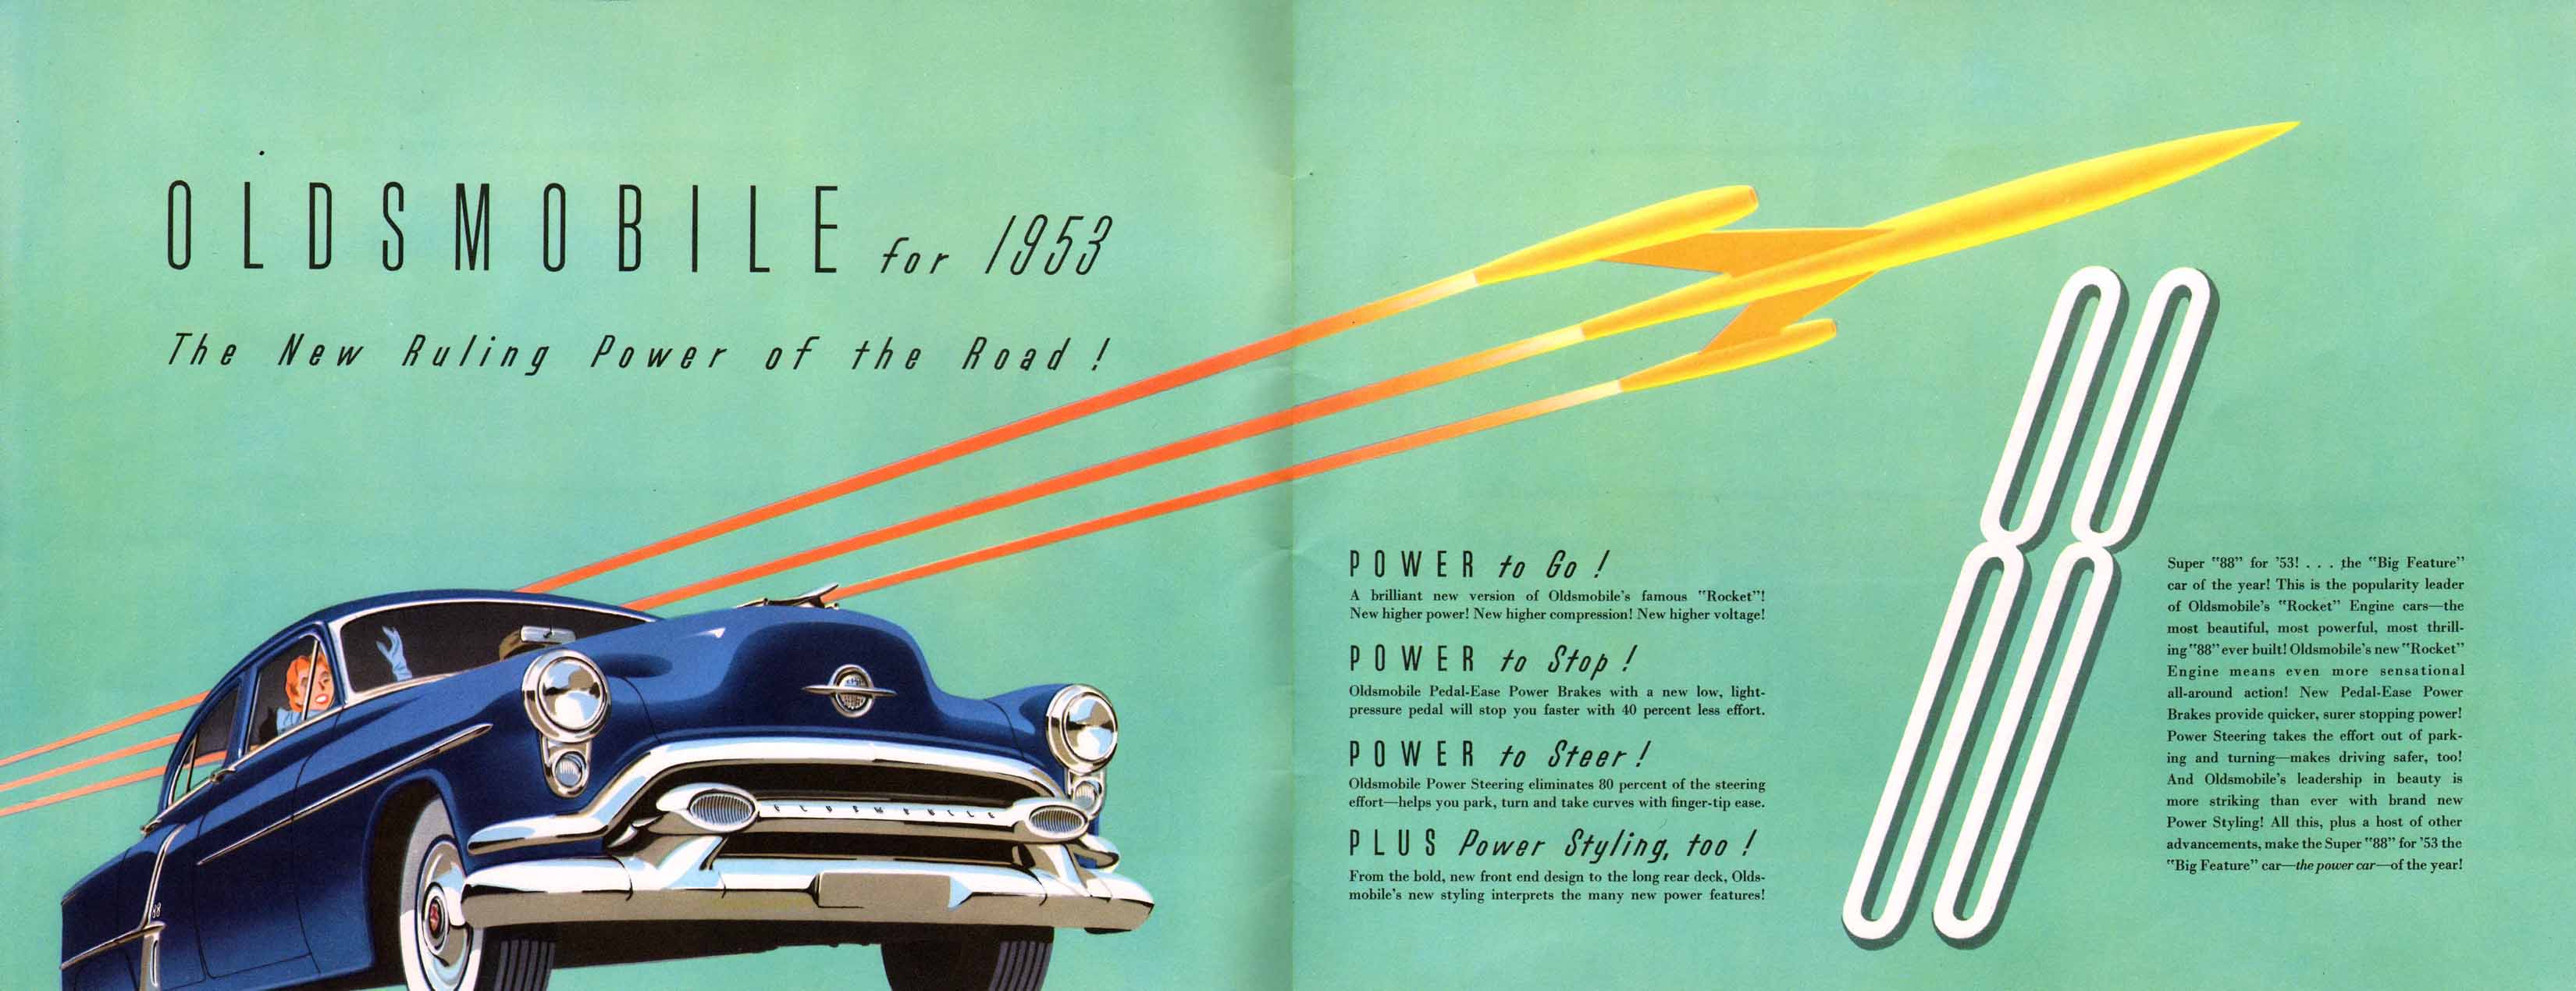 1953 Oldsmobile Motor Cars Brochure Page 11